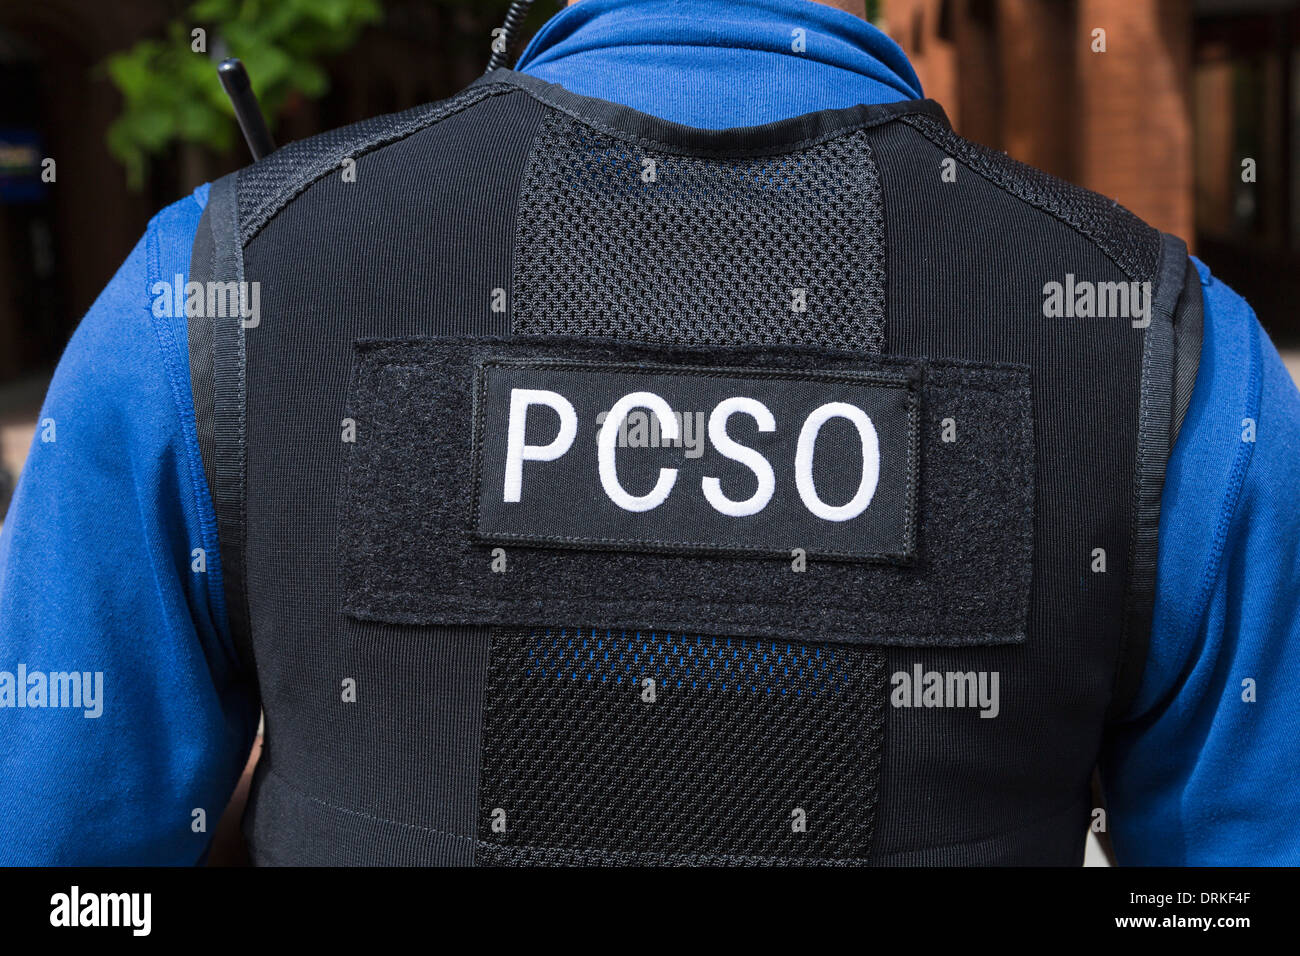 Soutien Communautaire Police Officer, PCSO uniforme, Angleterre Banque D'Images